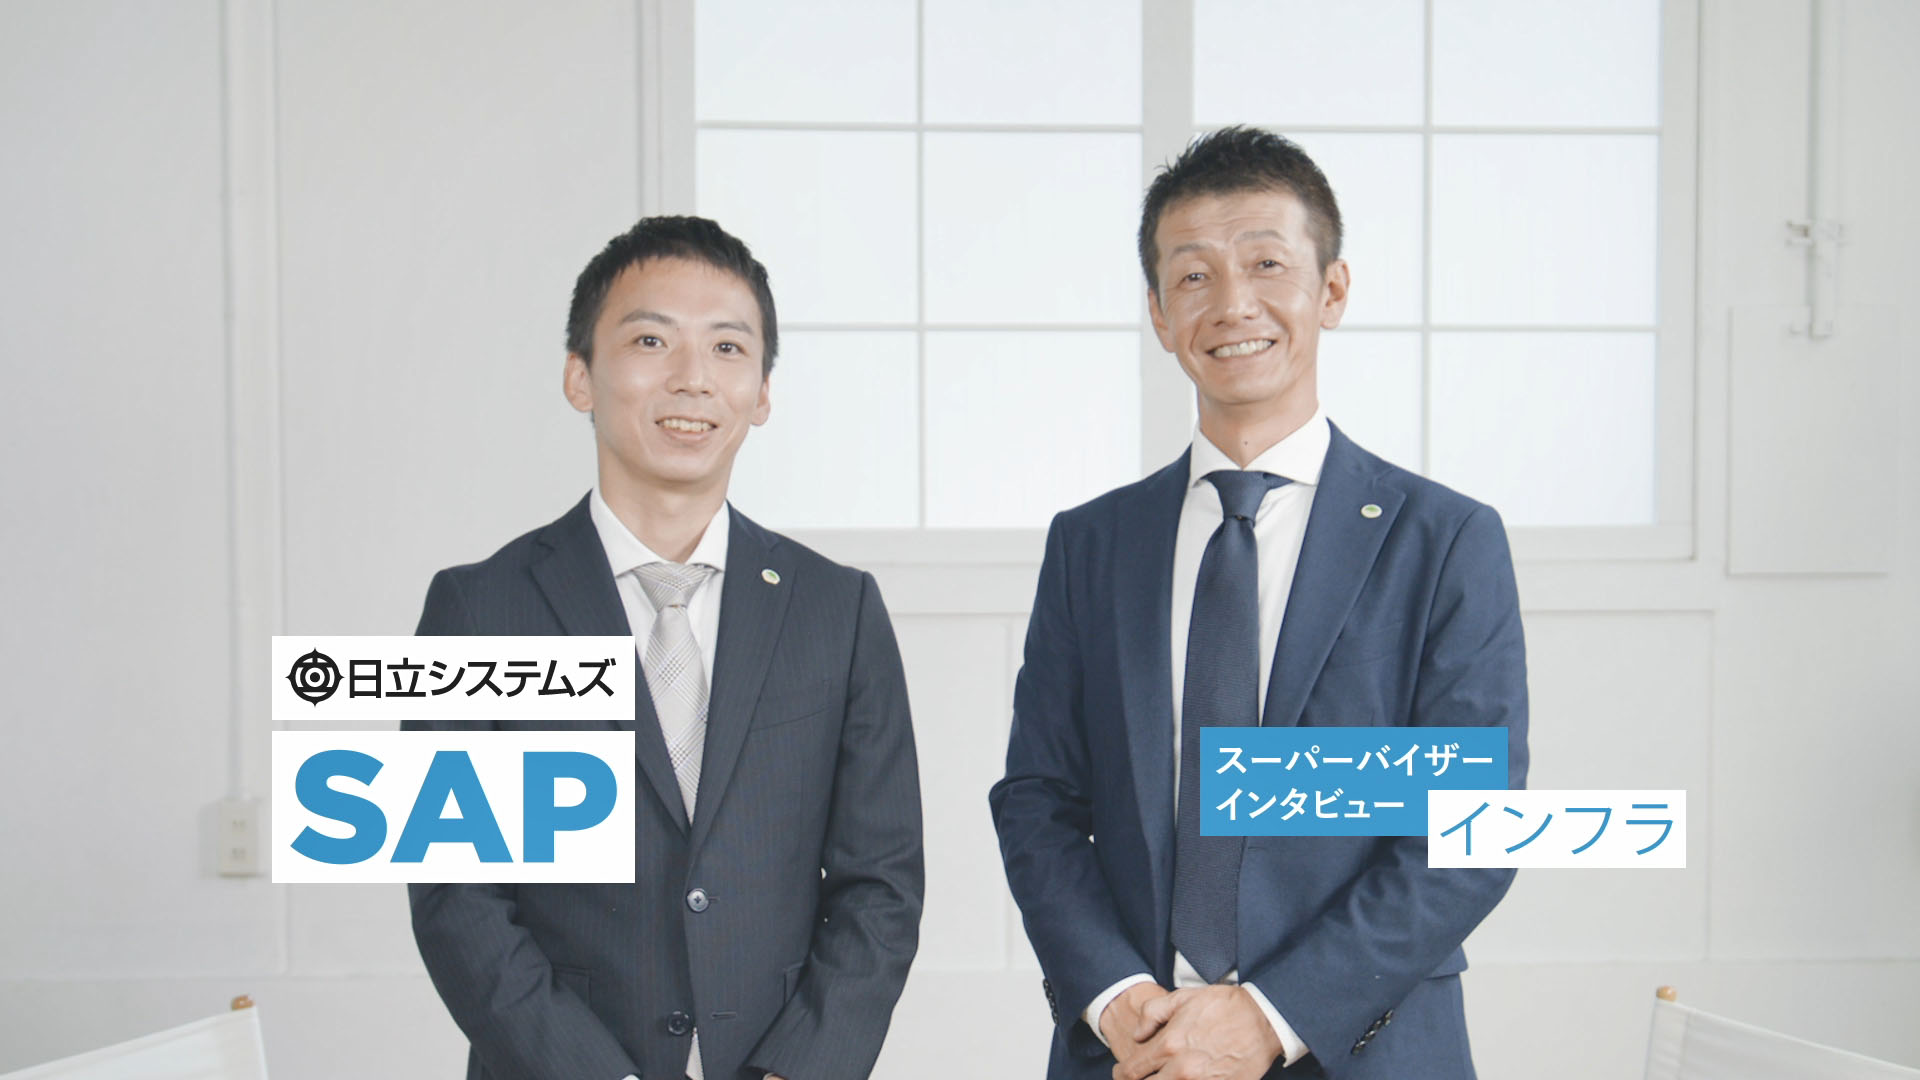 SAP S/4HANA スーパーバイザーインタビュー インフラ編